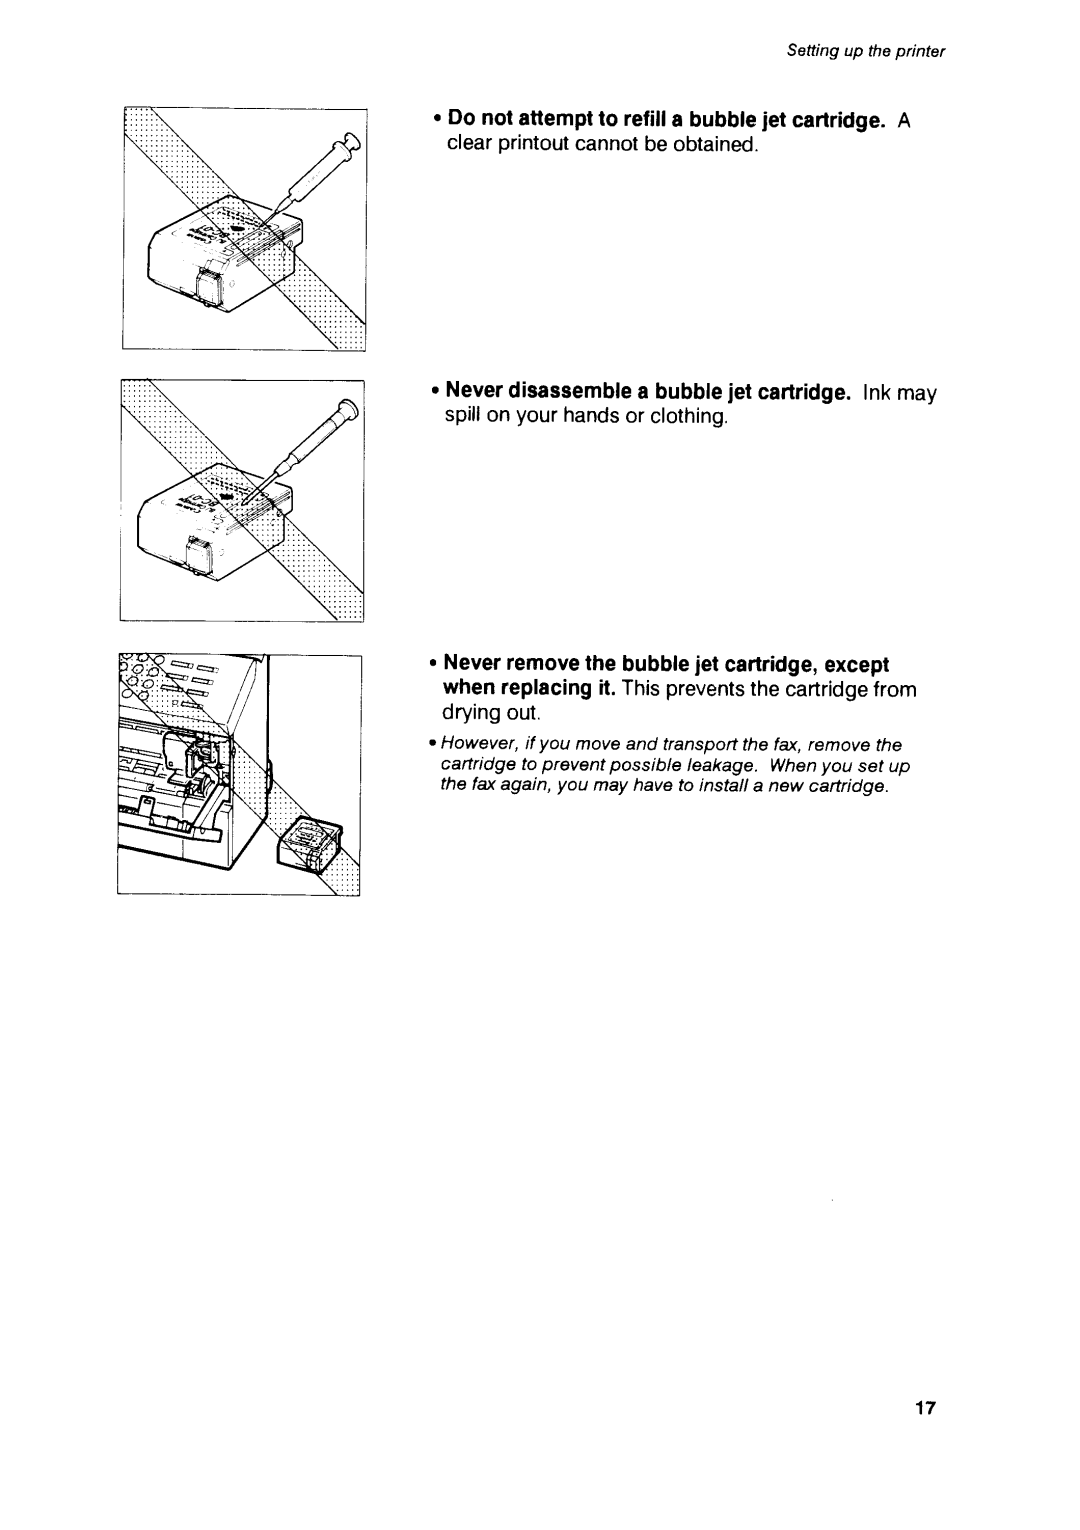 Canon B75 manual Settingup theprinter 